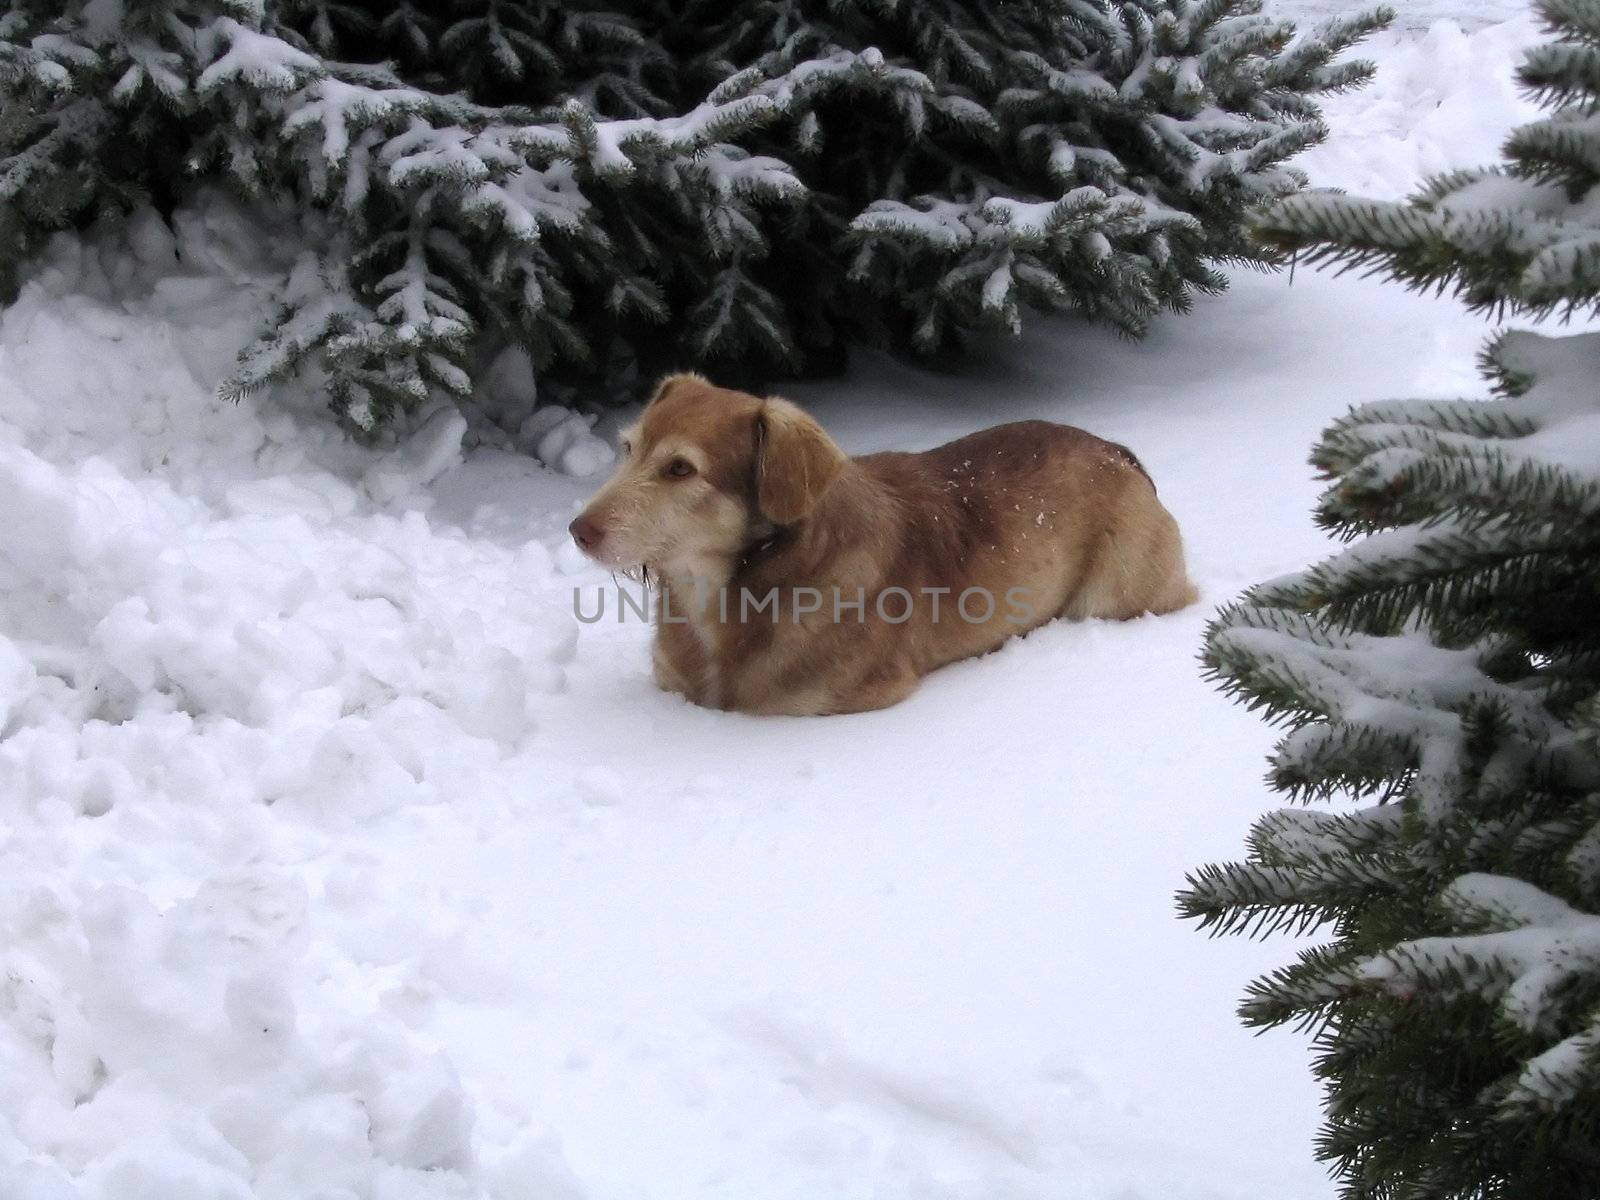 The dog on snow